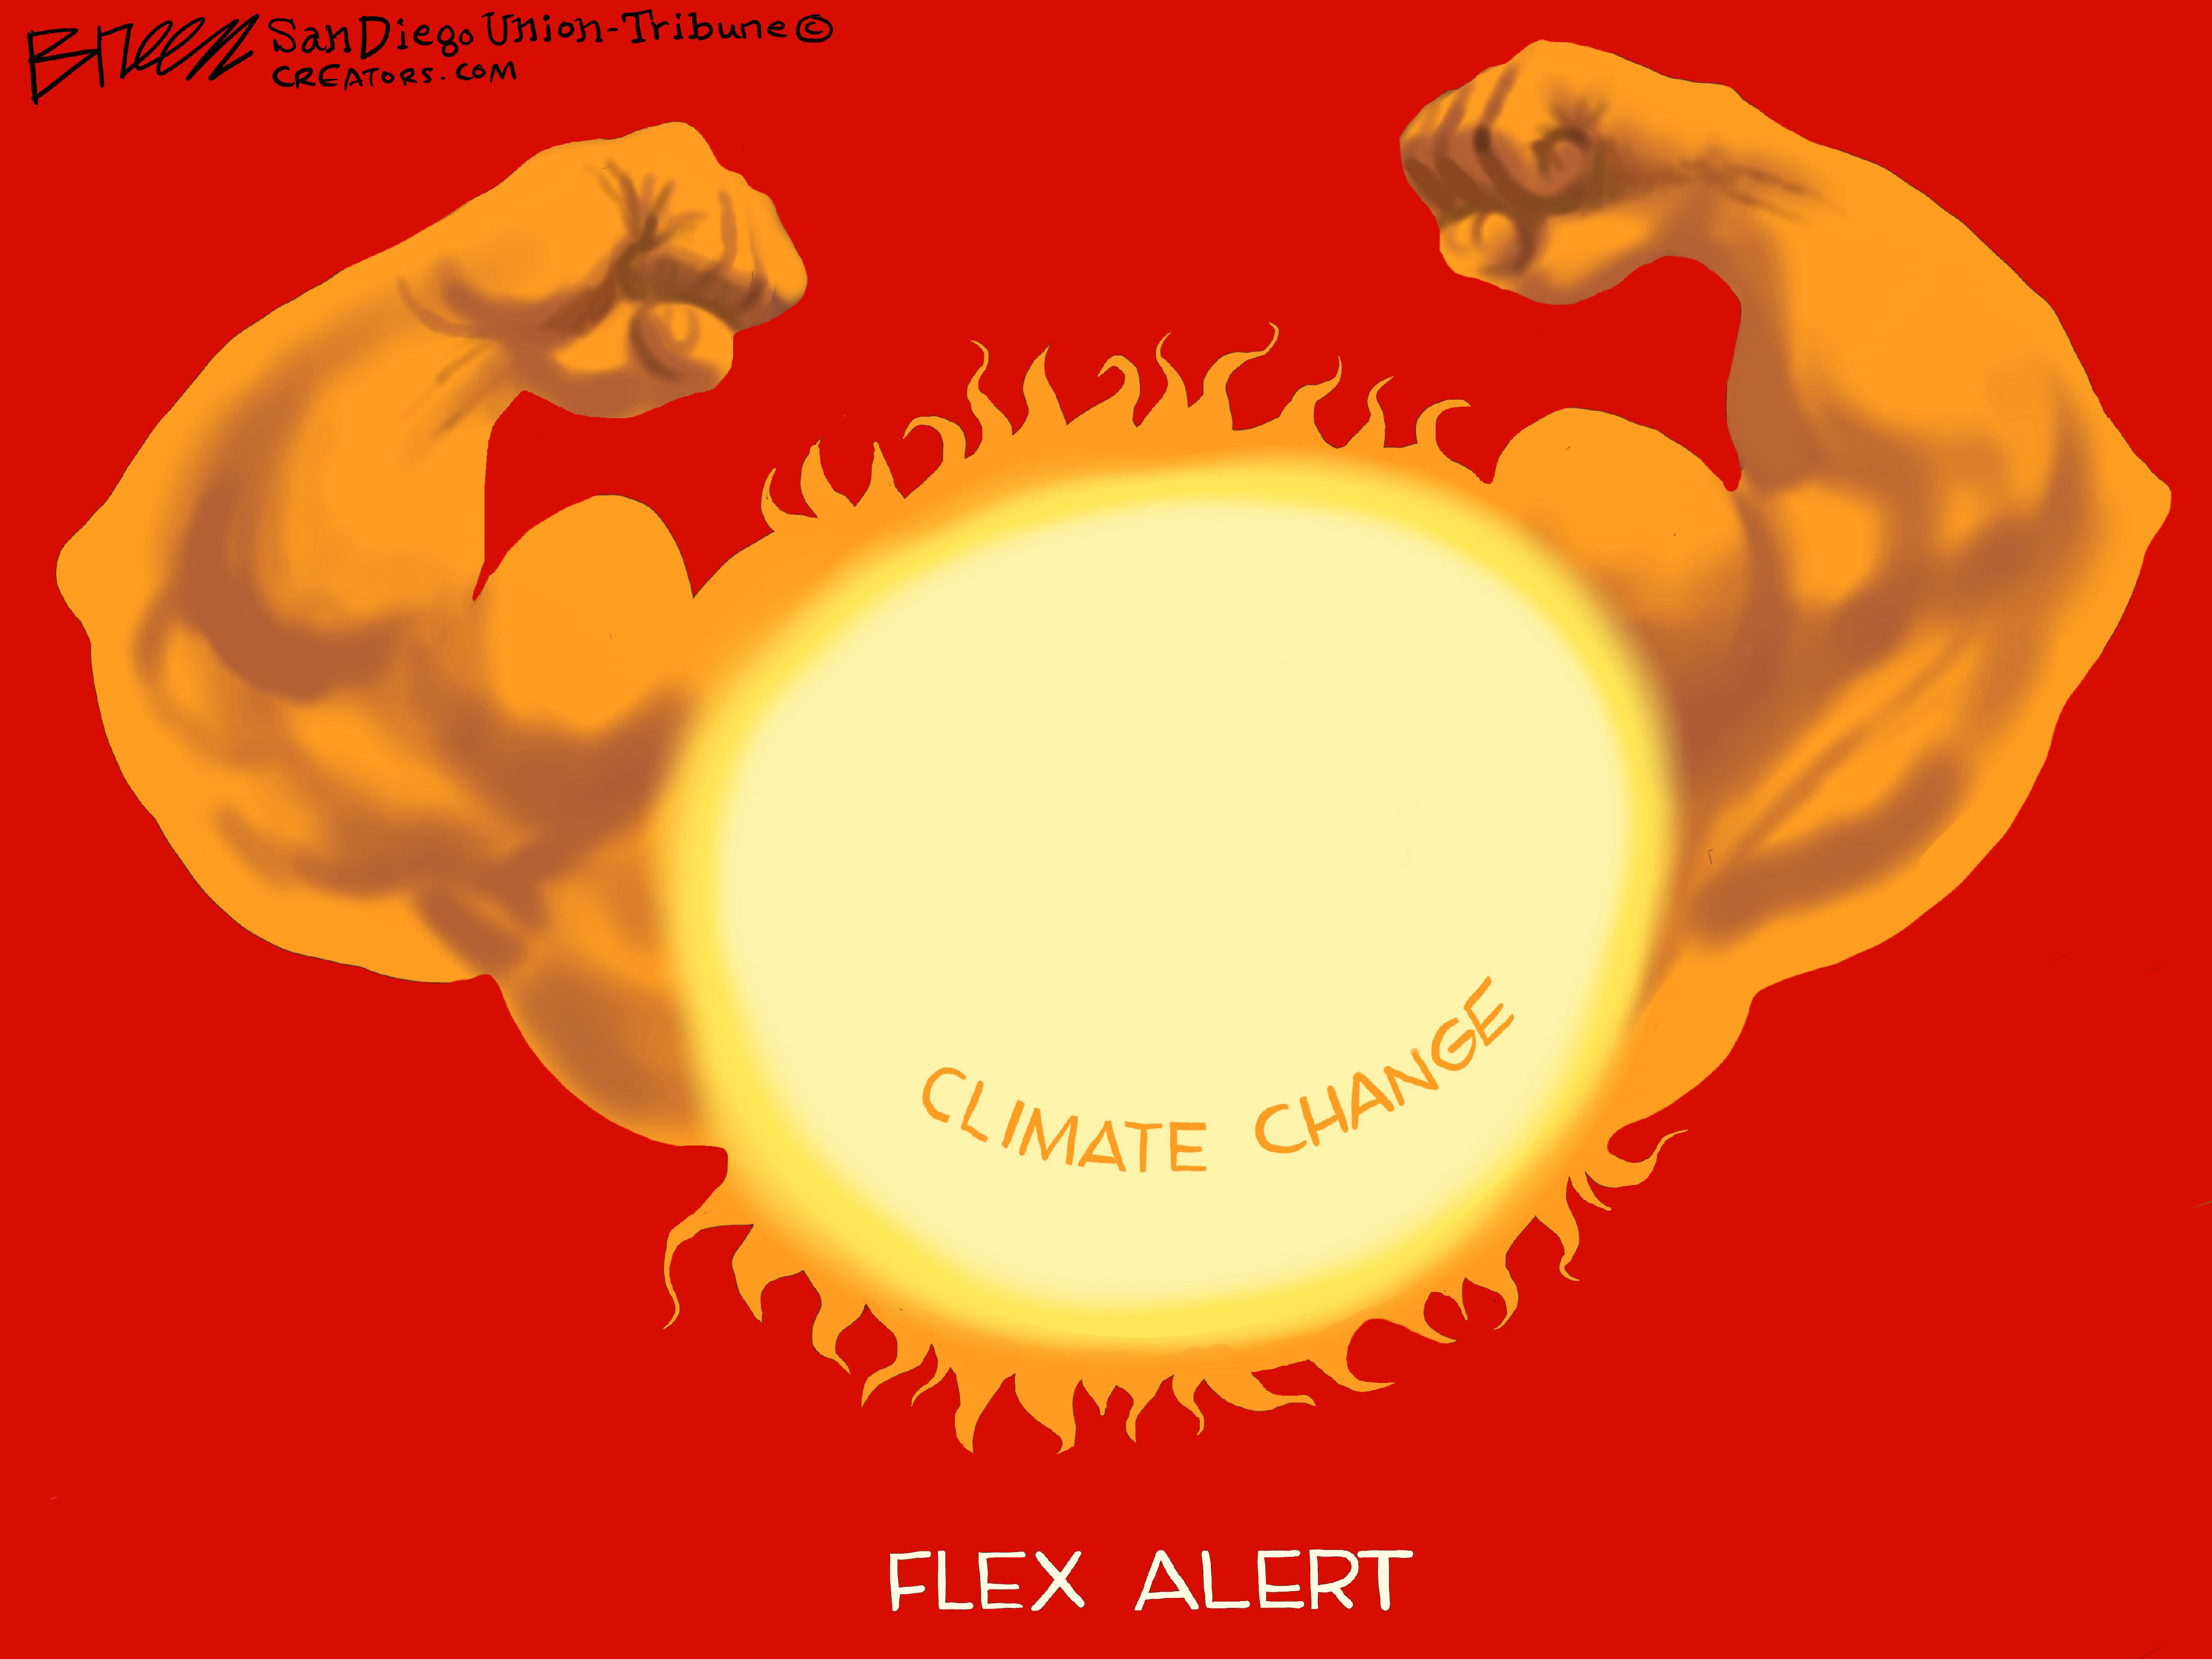 Editorial Cartoon World climate change flex